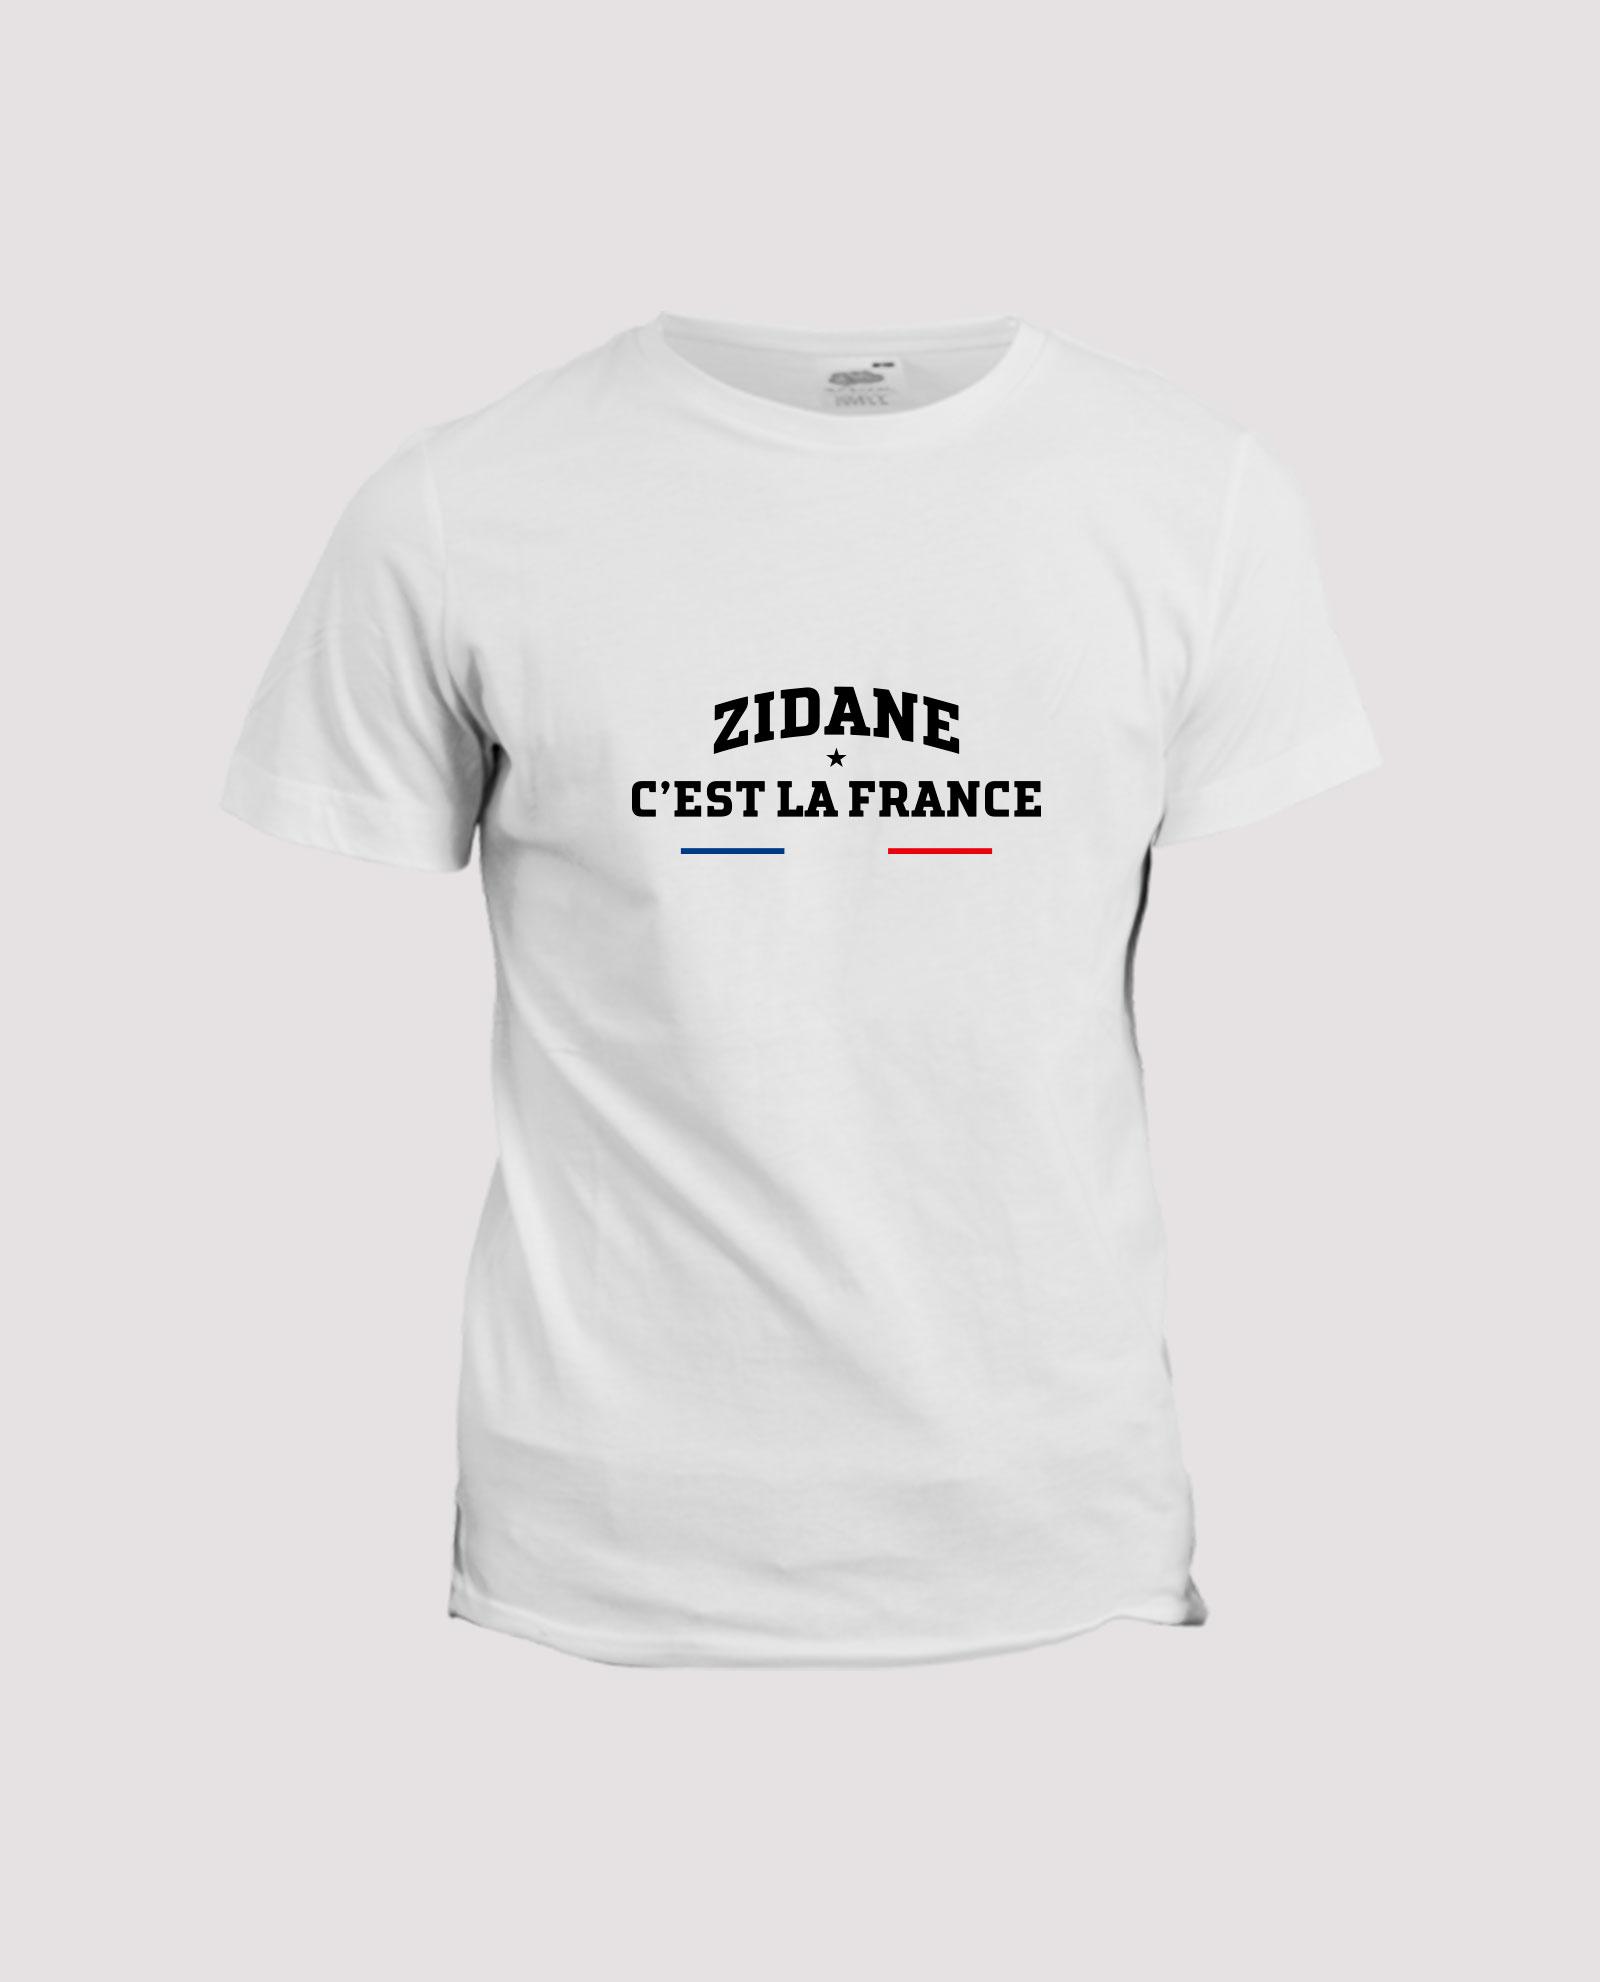 la-ligne-shop-t-shirt-blanc-football-tweet-twitter-kilian-mbappe-noel-le-gret-zidane-c-est-la-france-v6